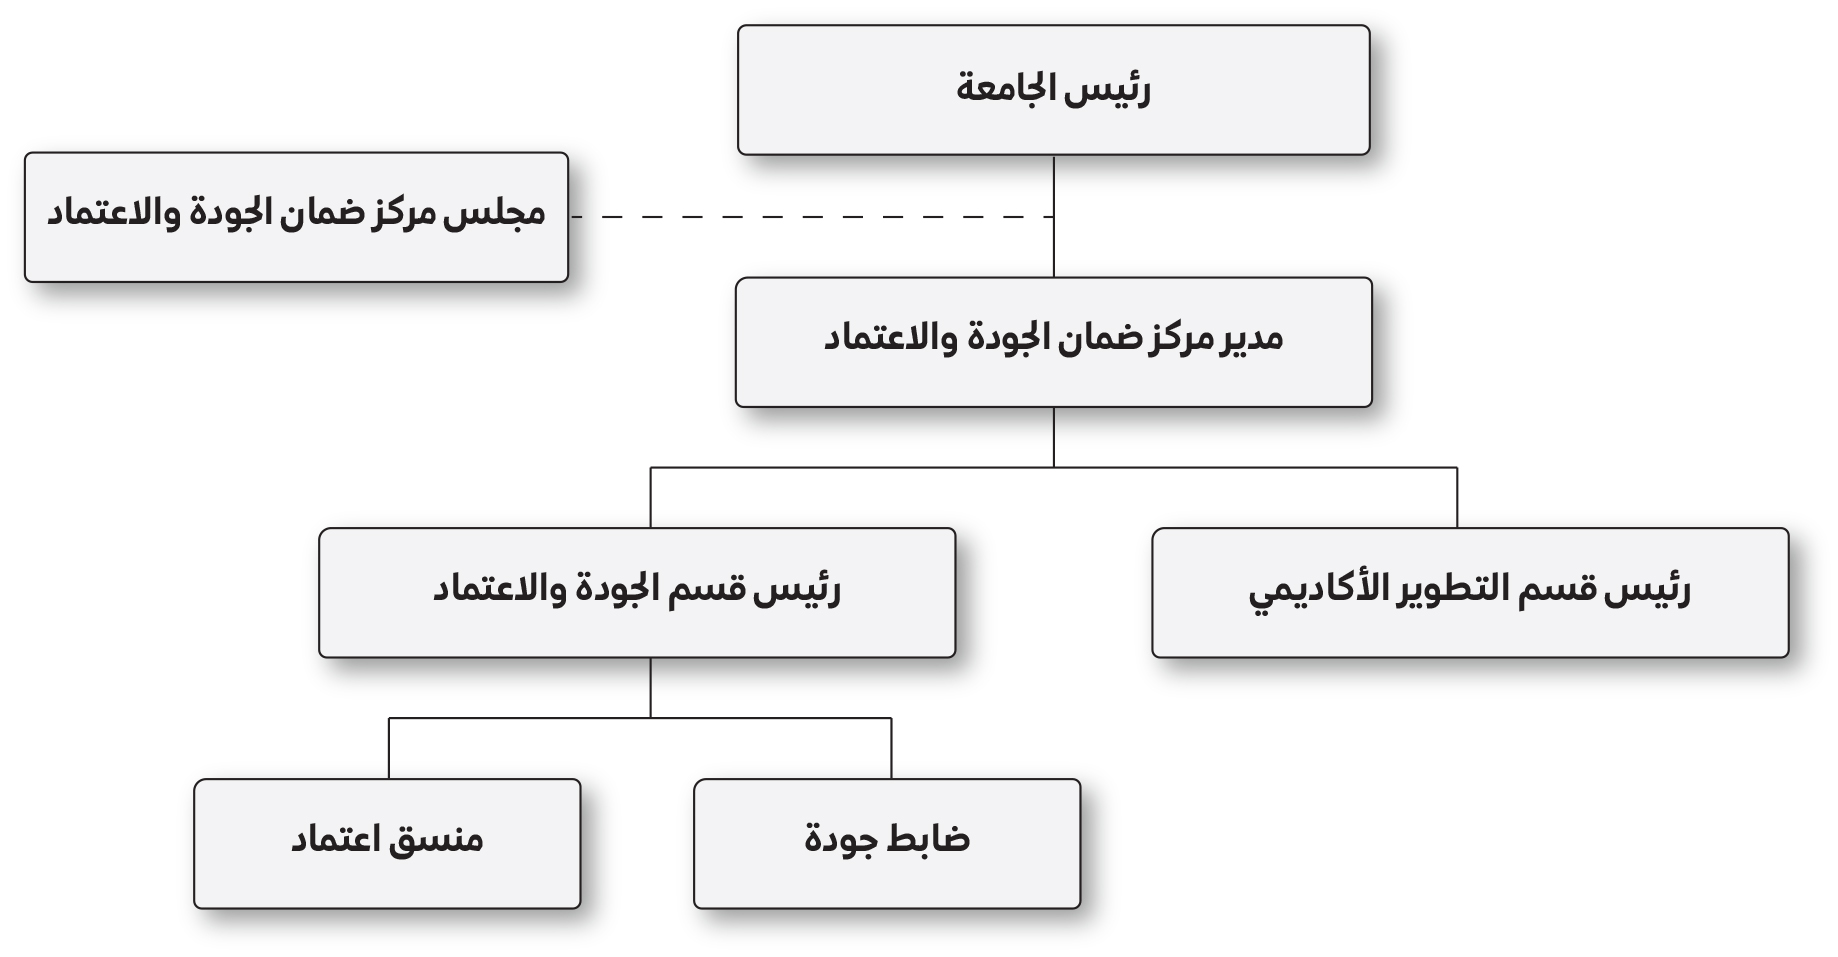 qaac-organization-chart-arabic-1.jpg